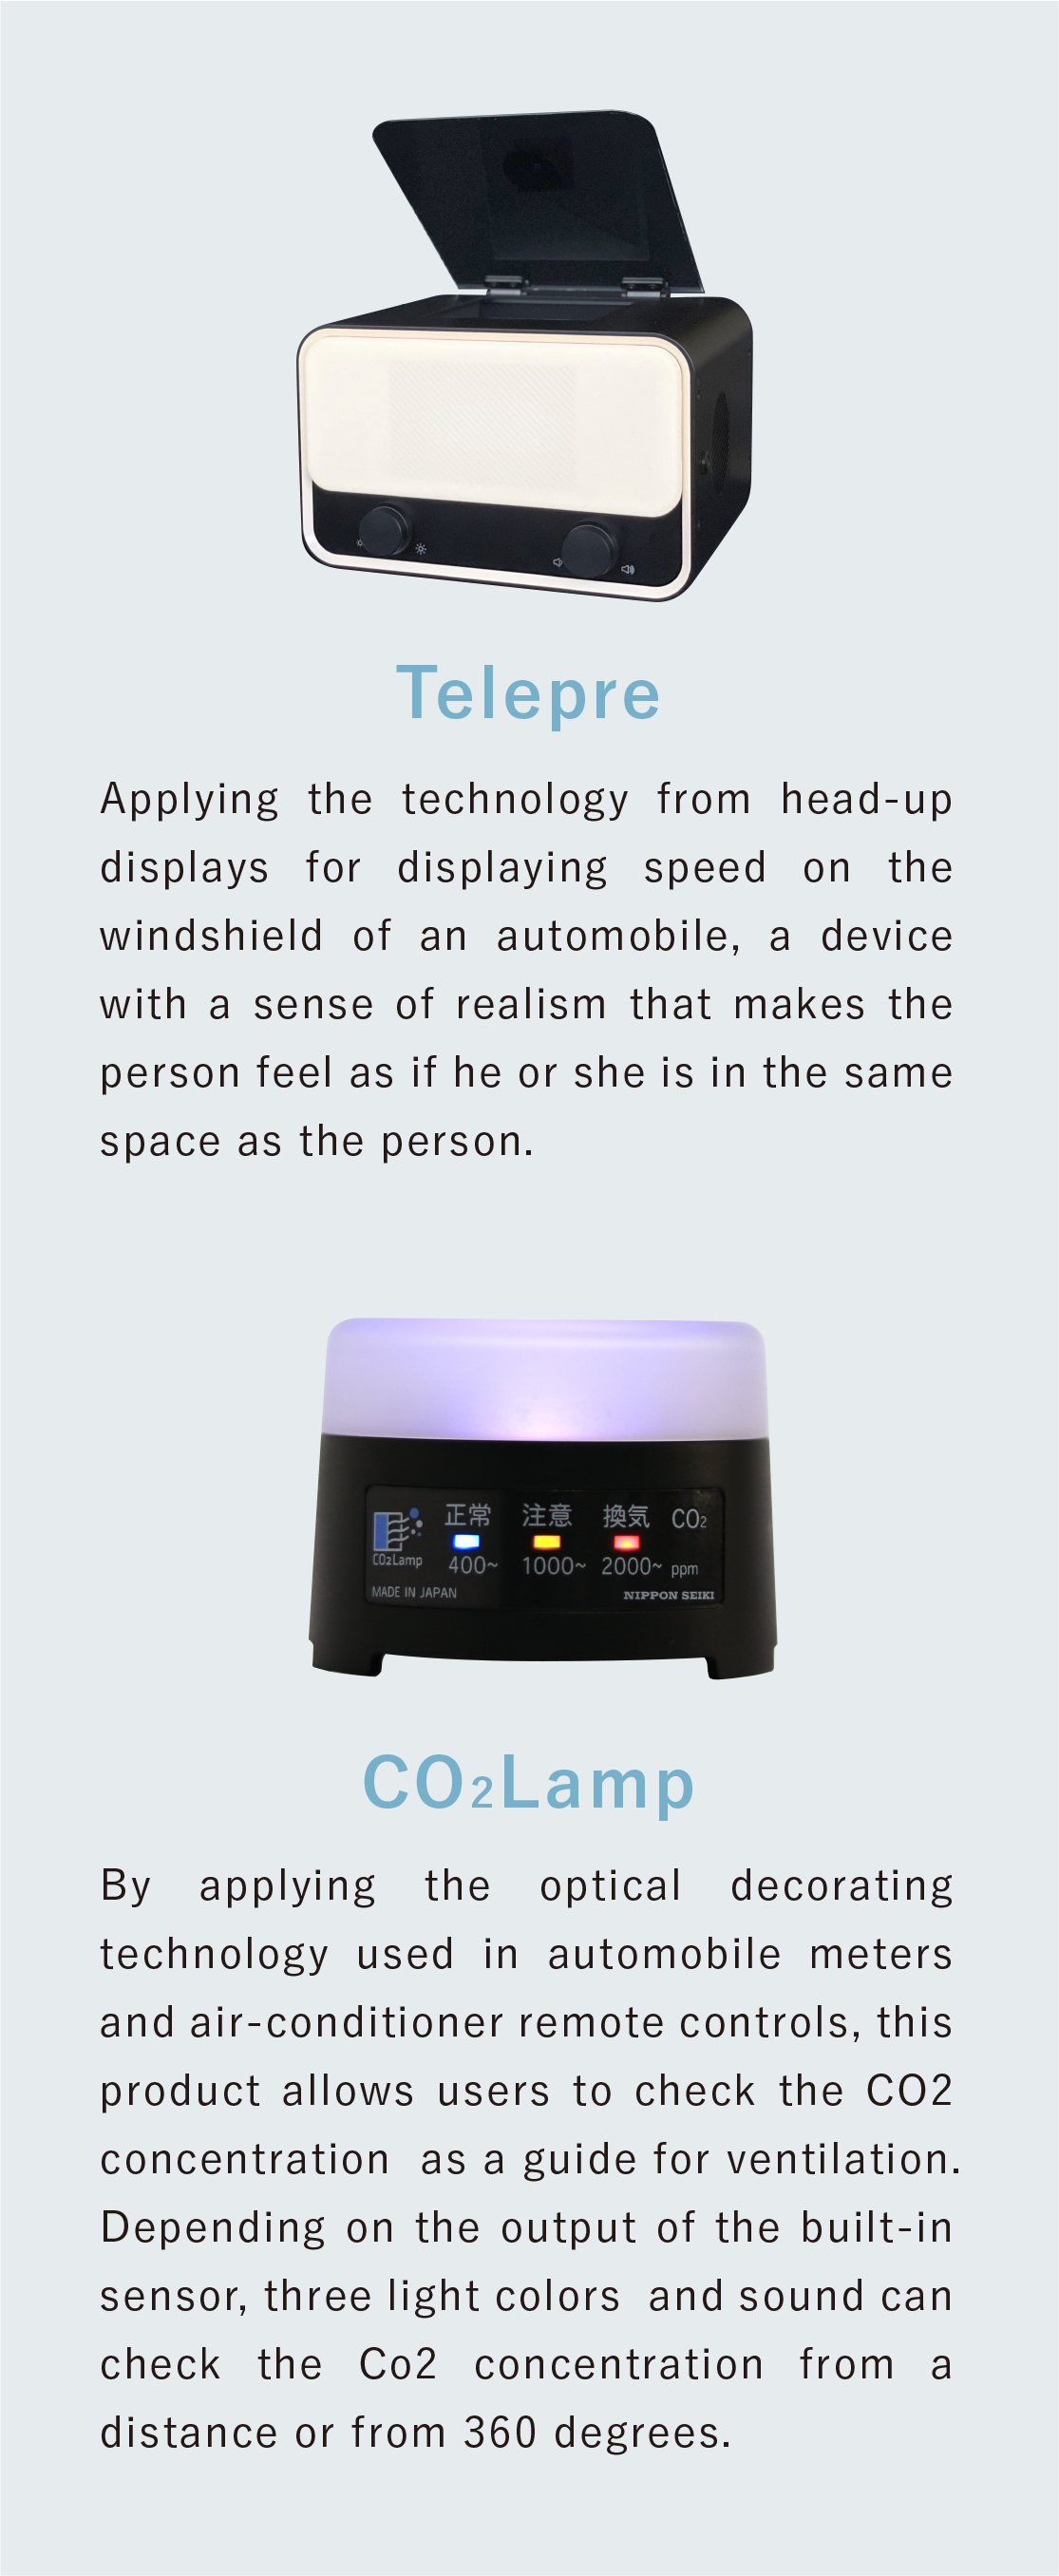 Telepre/CO2Lamp